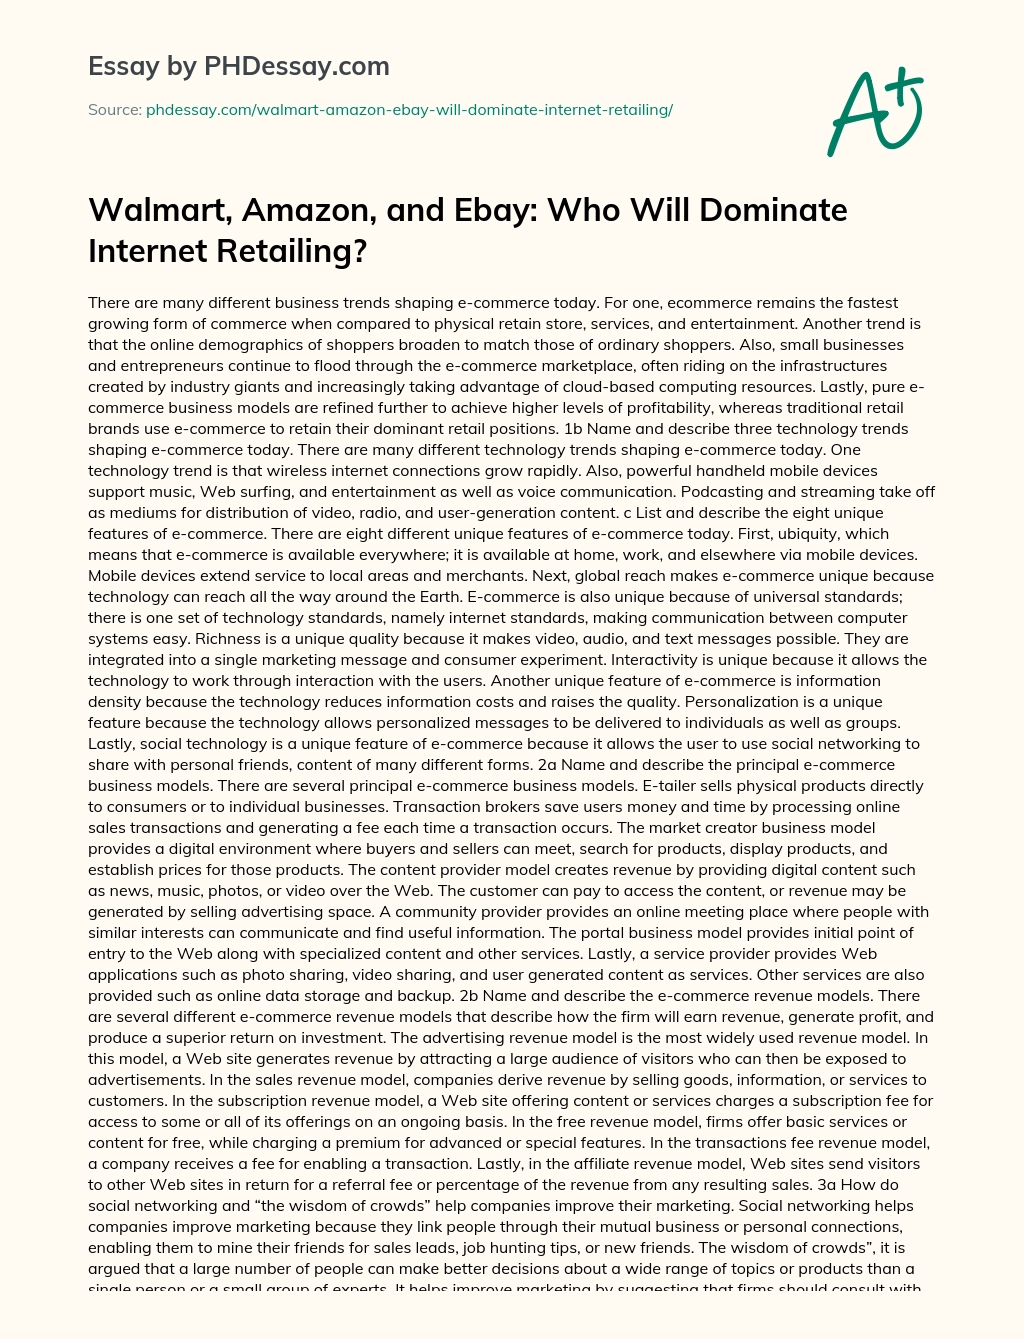 Walmart, Amazon, and Ebay: Who Will Dominate Internet Retailing? essay